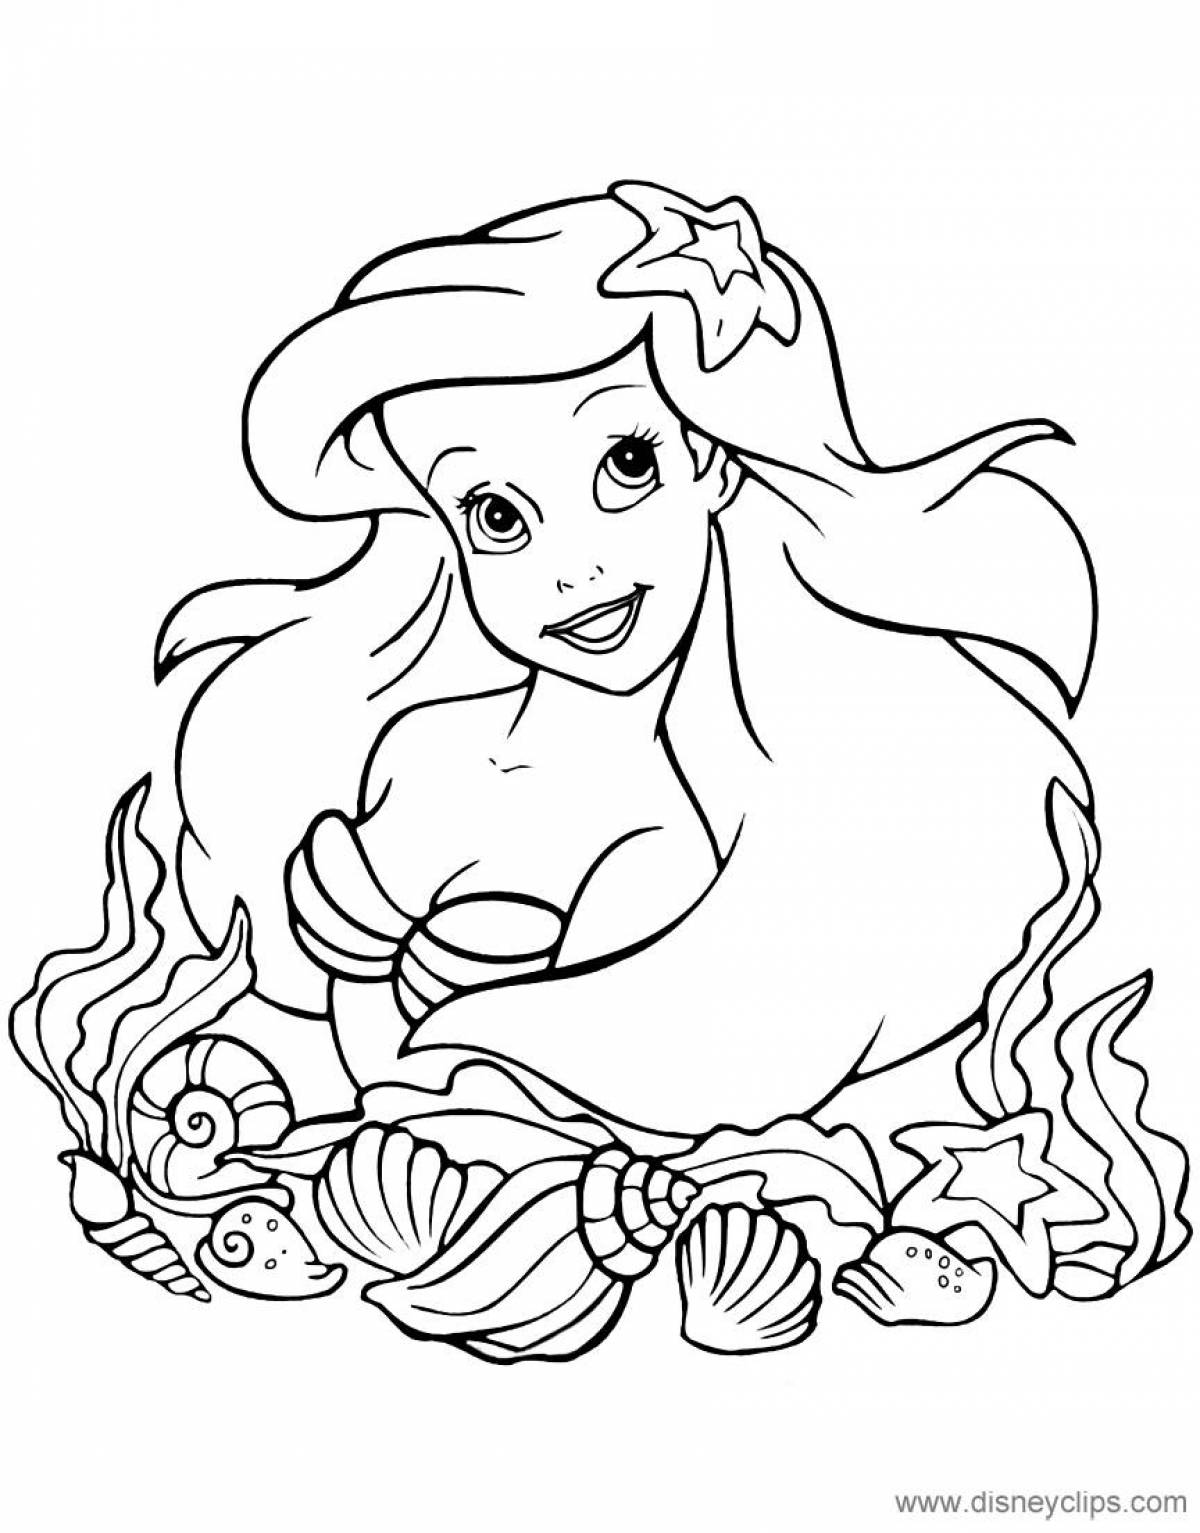 Adorable mermaid coloring page